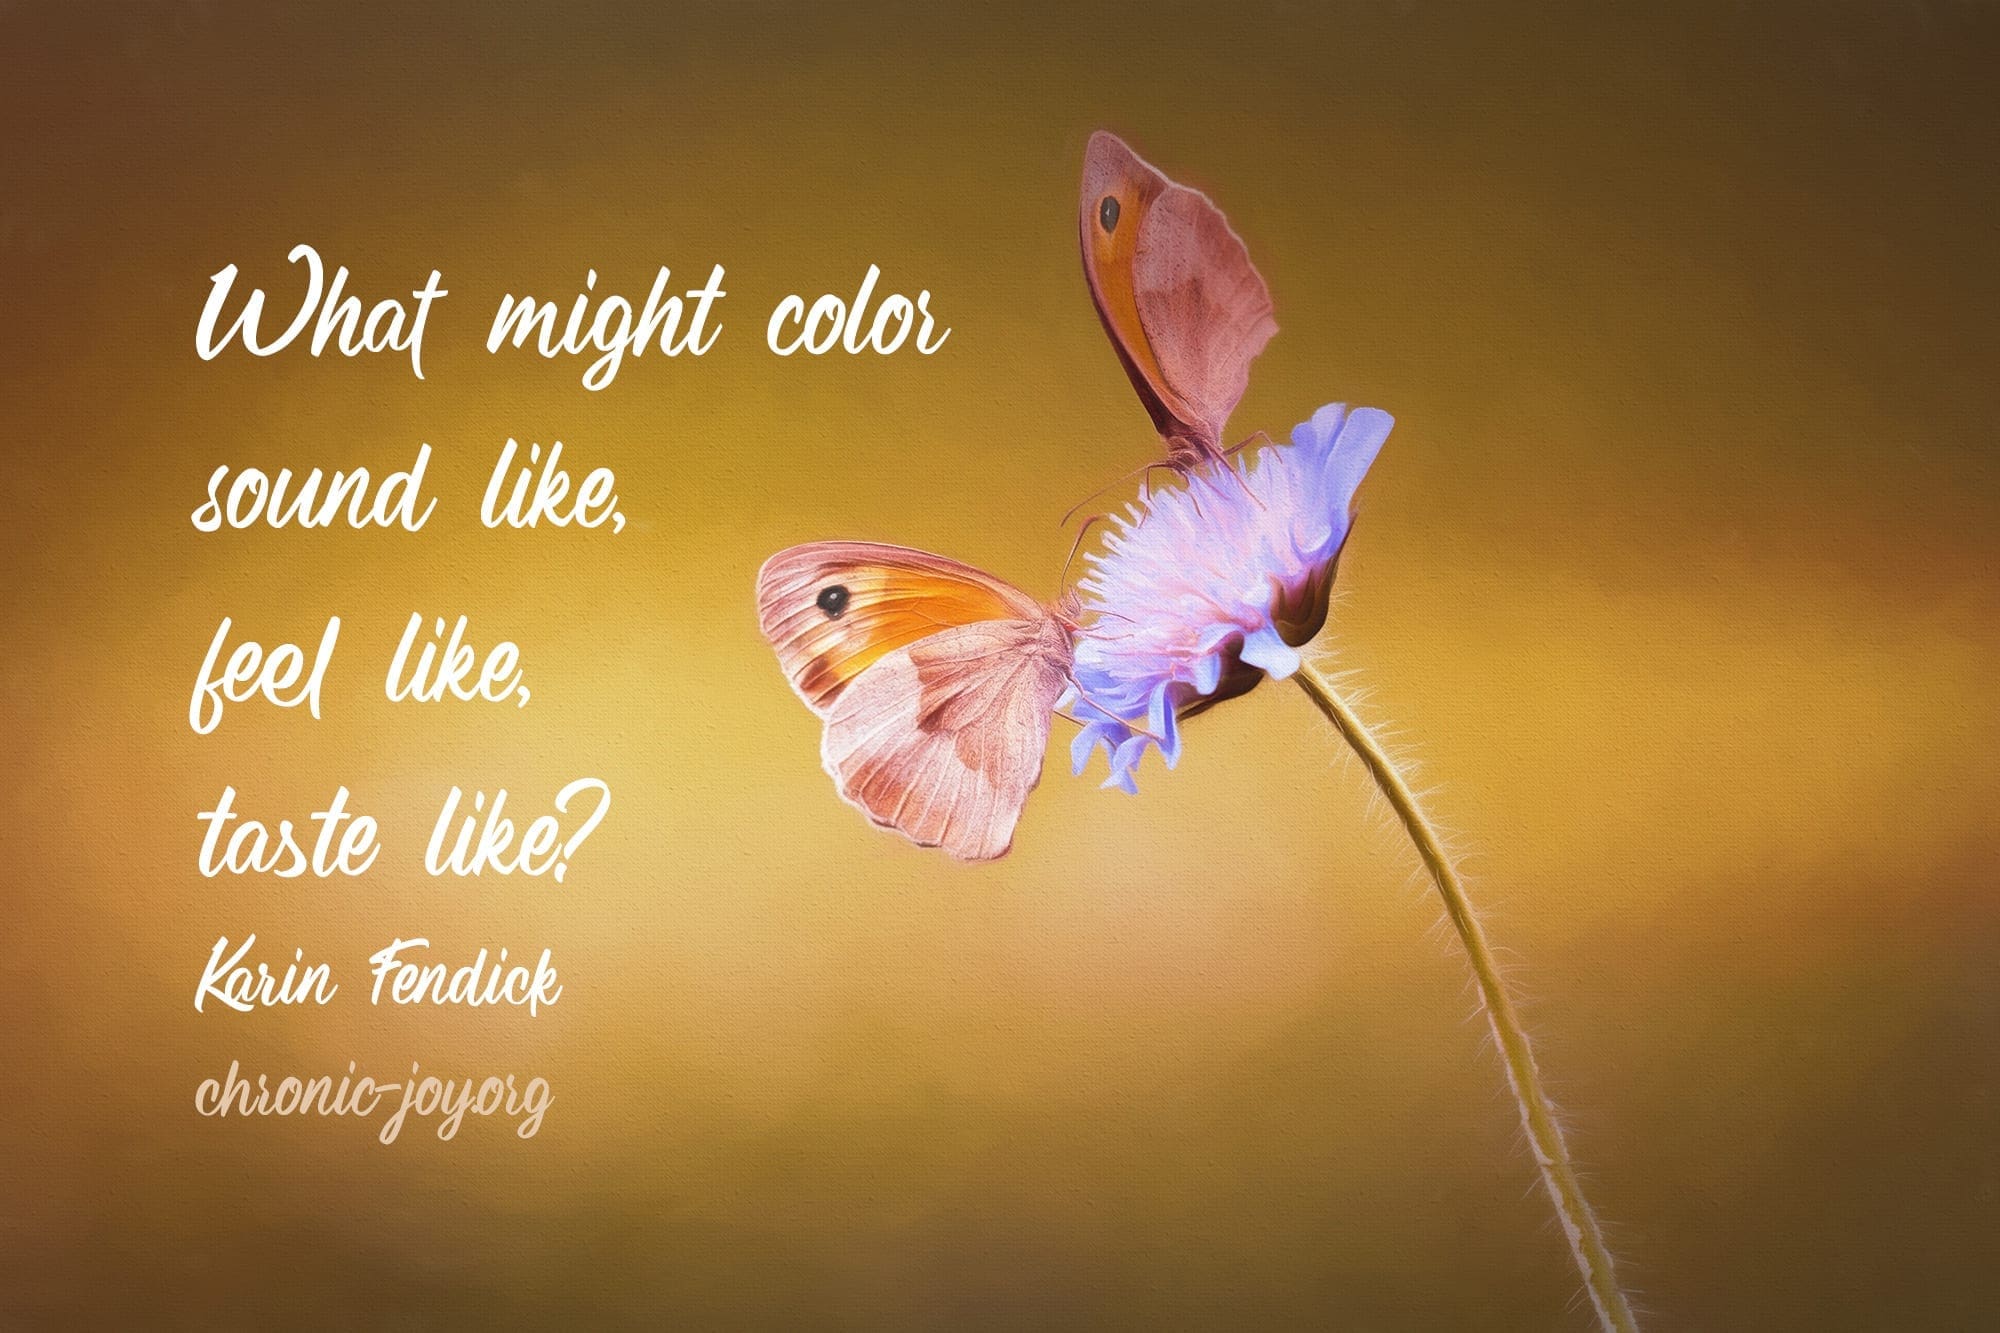 "What might color sound like, feel like, taste like?" Karin Fendick